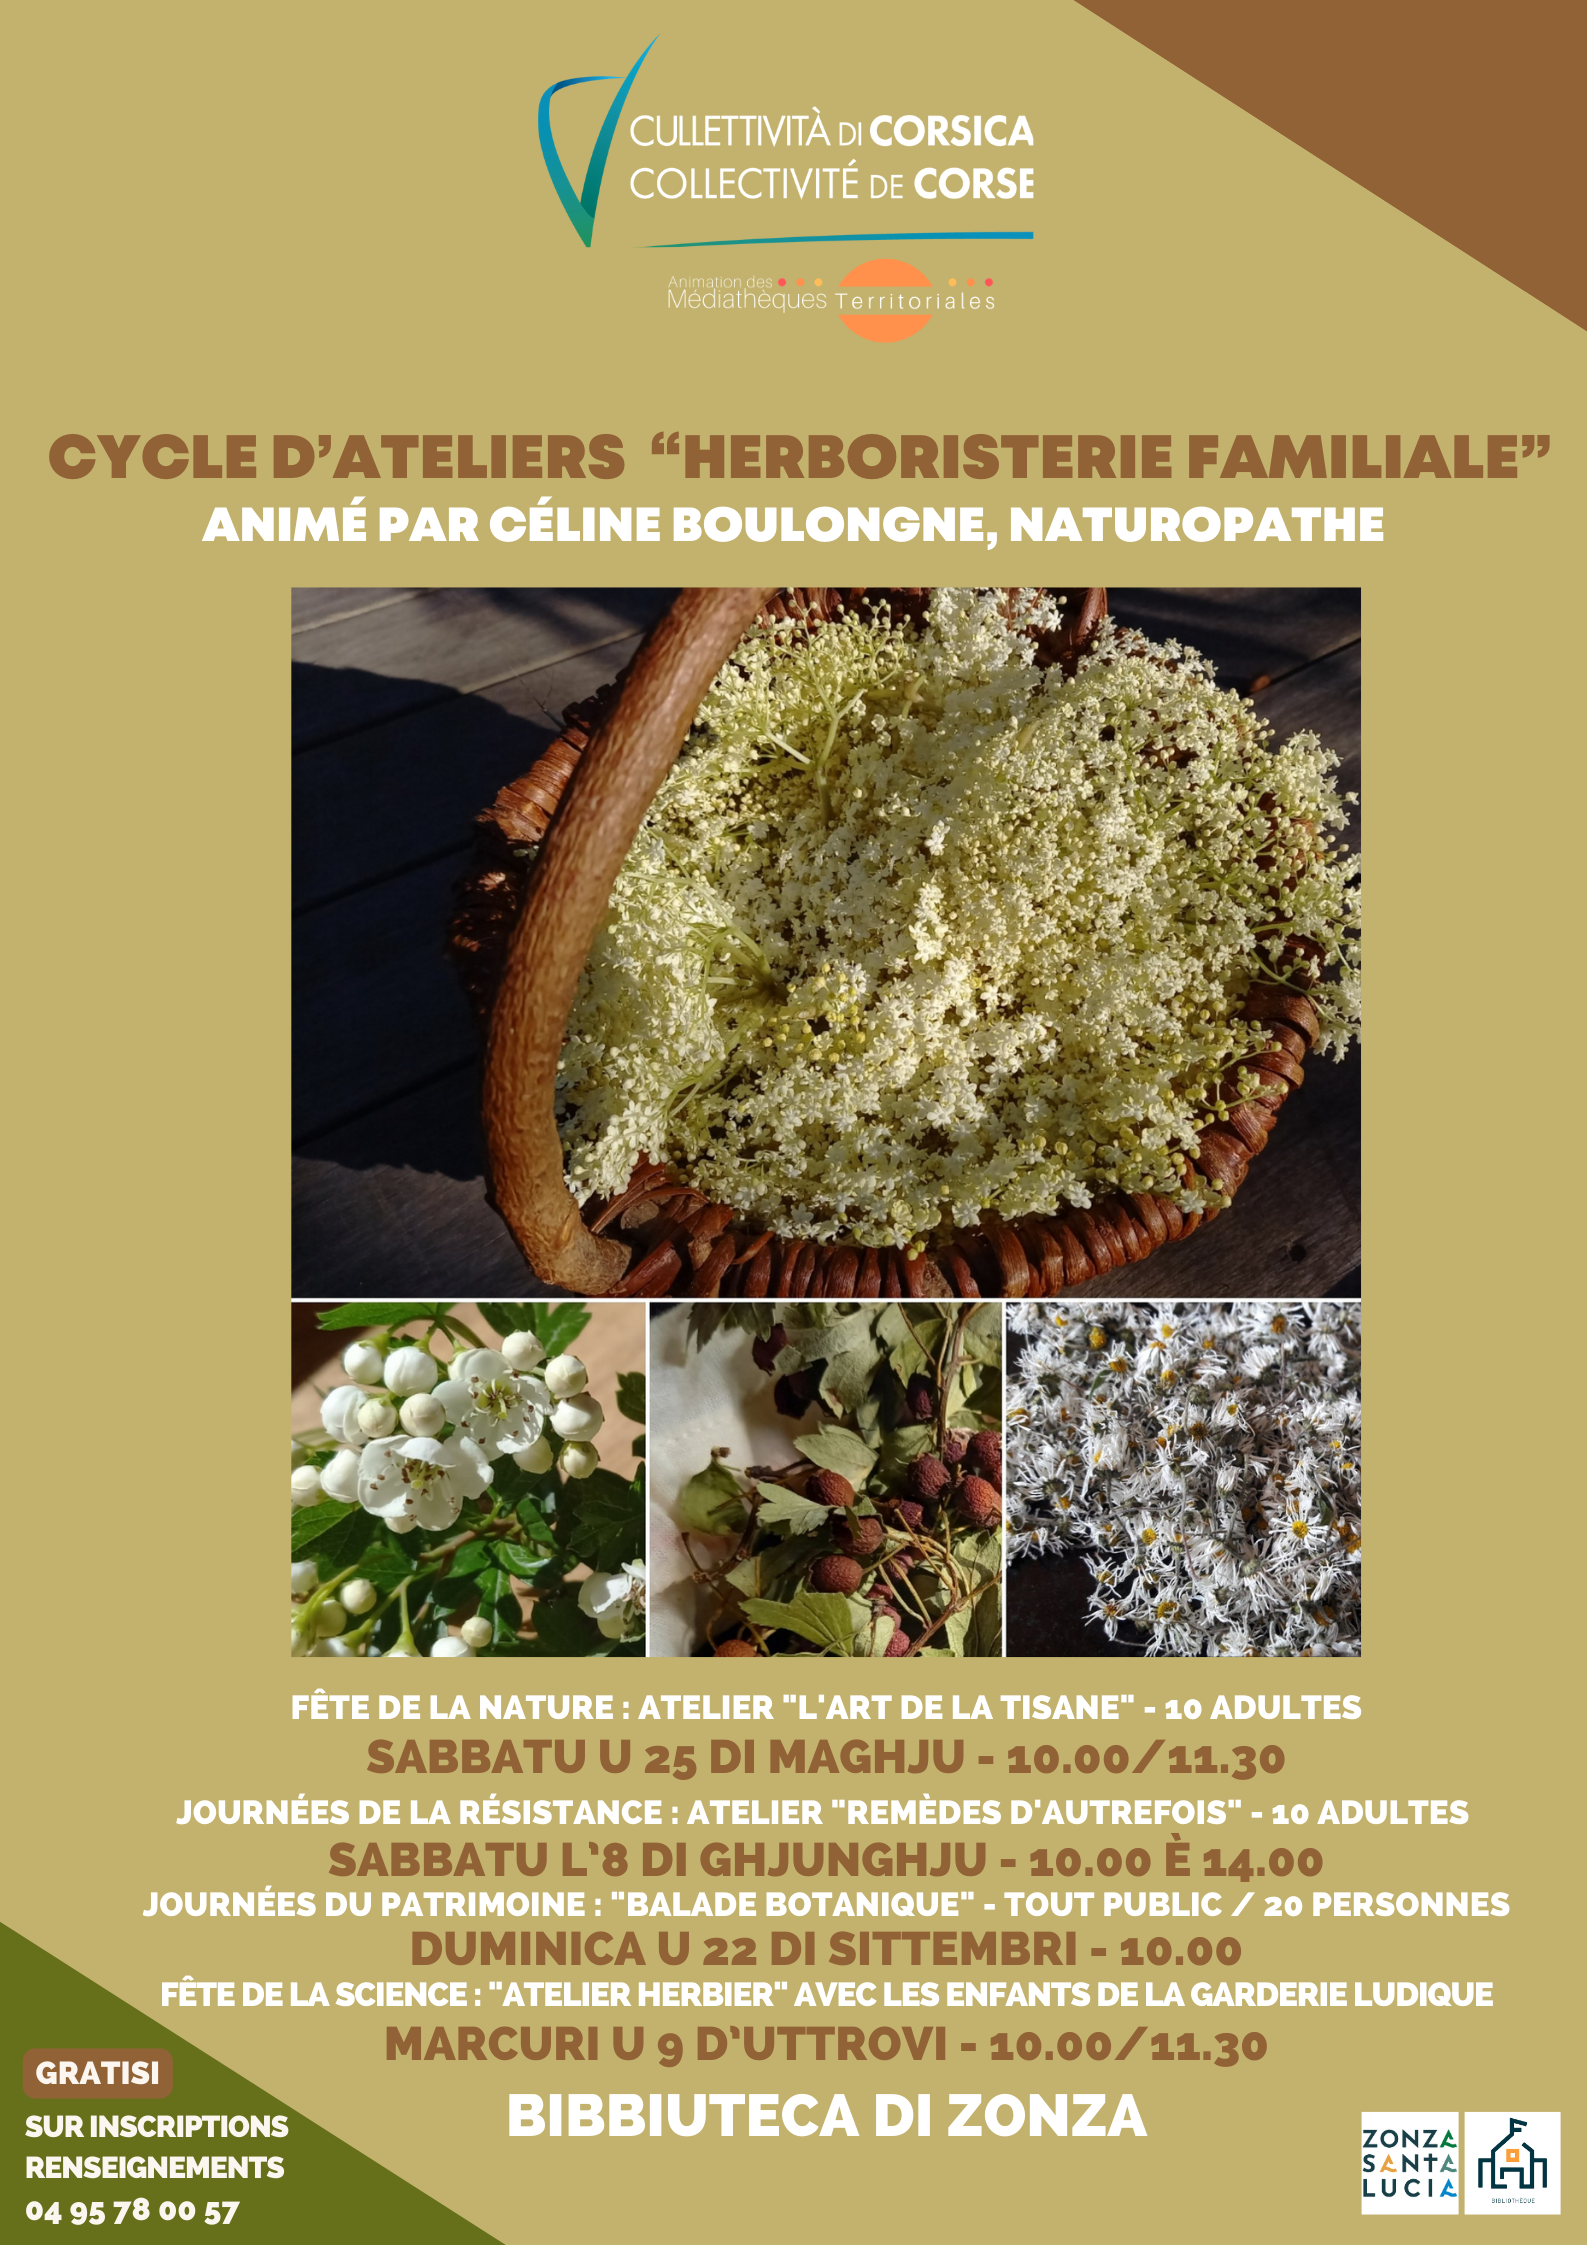 Cycle d'ateliers "Herboristerie familiale" animés par Céline Boulongne, naturopathe - Bibbiuteca di Zonza